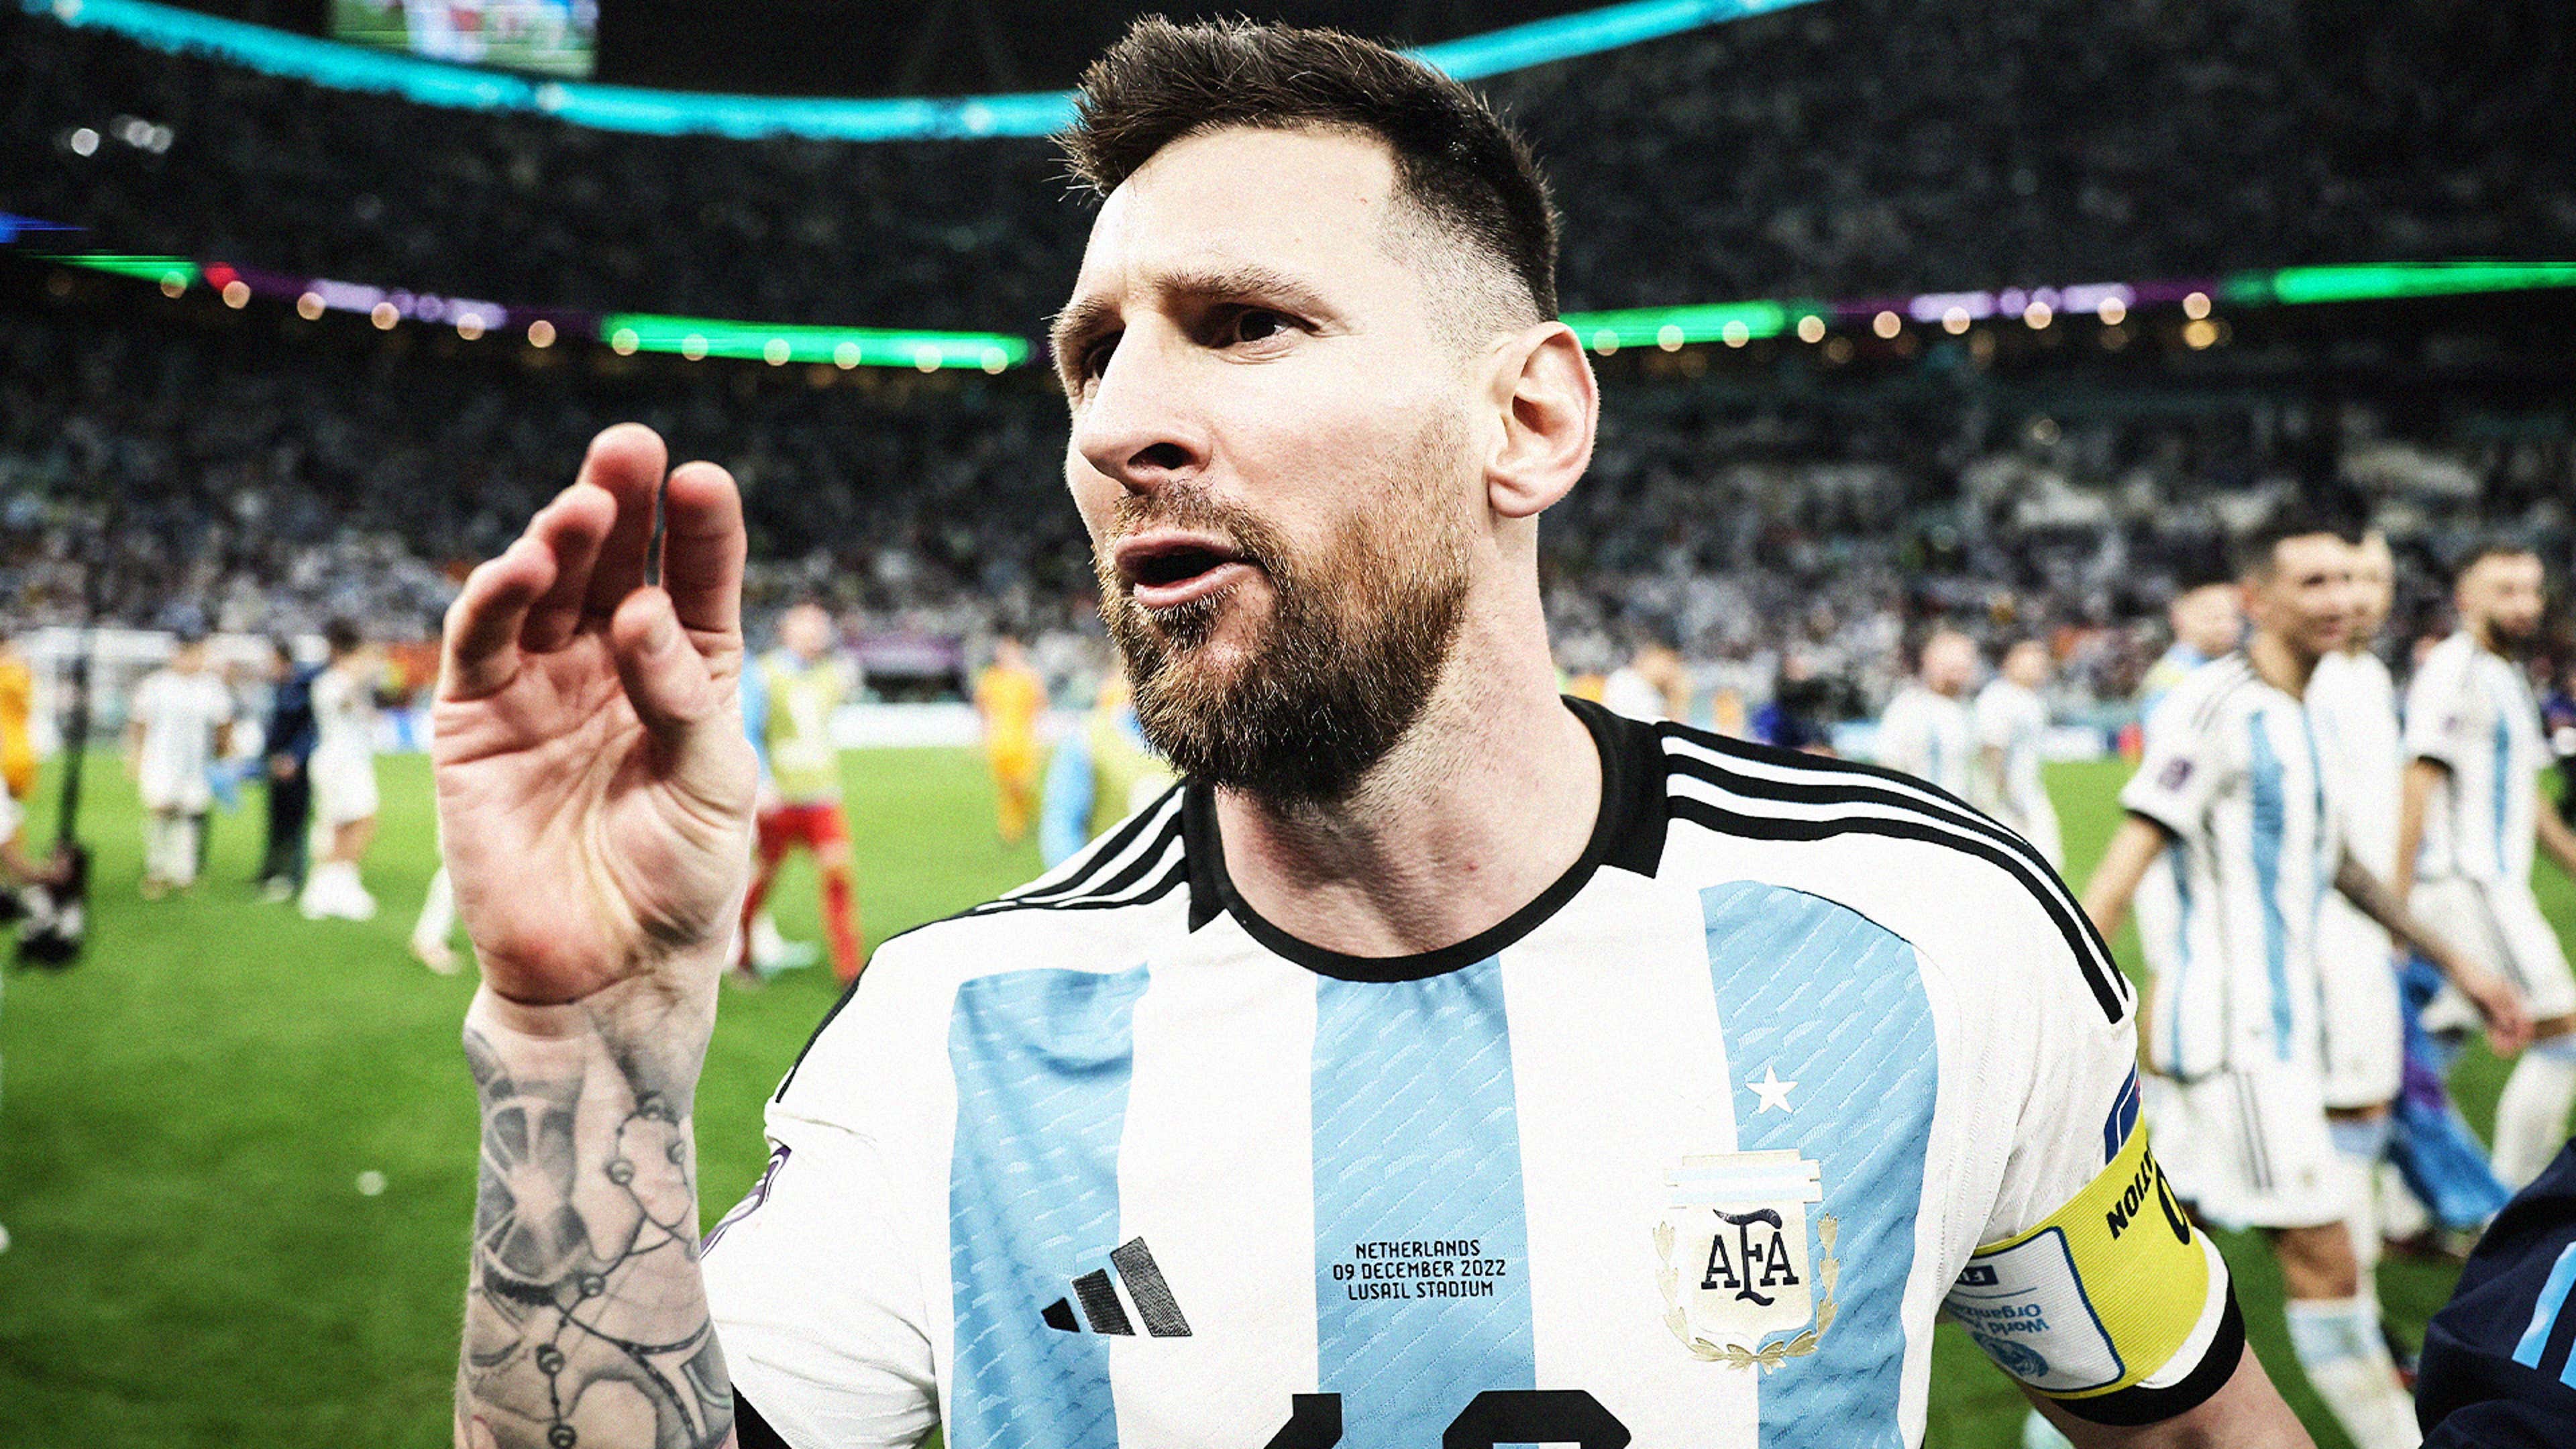 La Liga: Why I and Ronaldo will never be friends - Messi - Daily Post  Nigeria